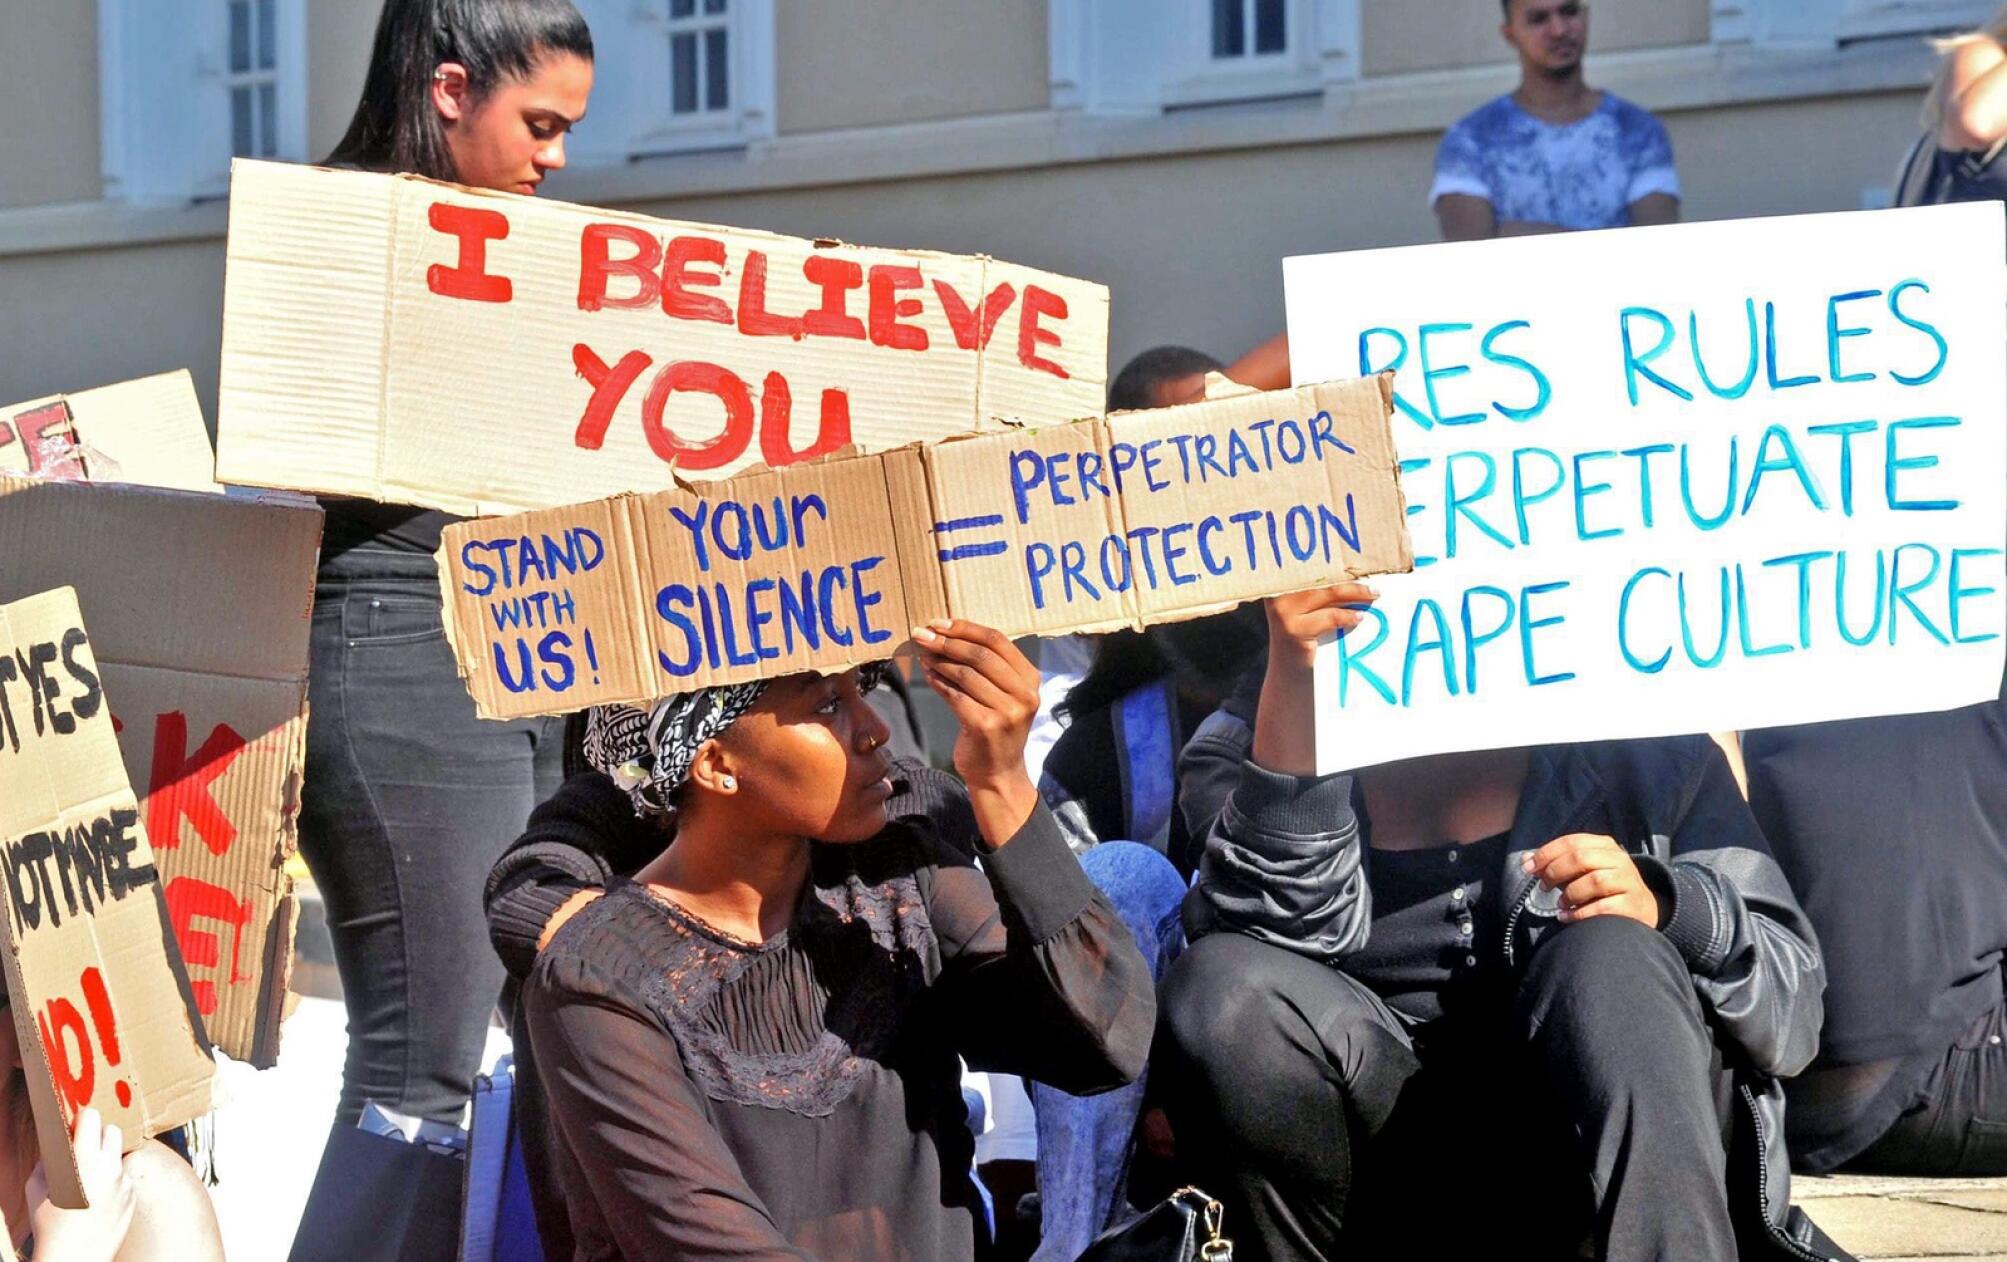 A group of activists waving placards denouncing rape 